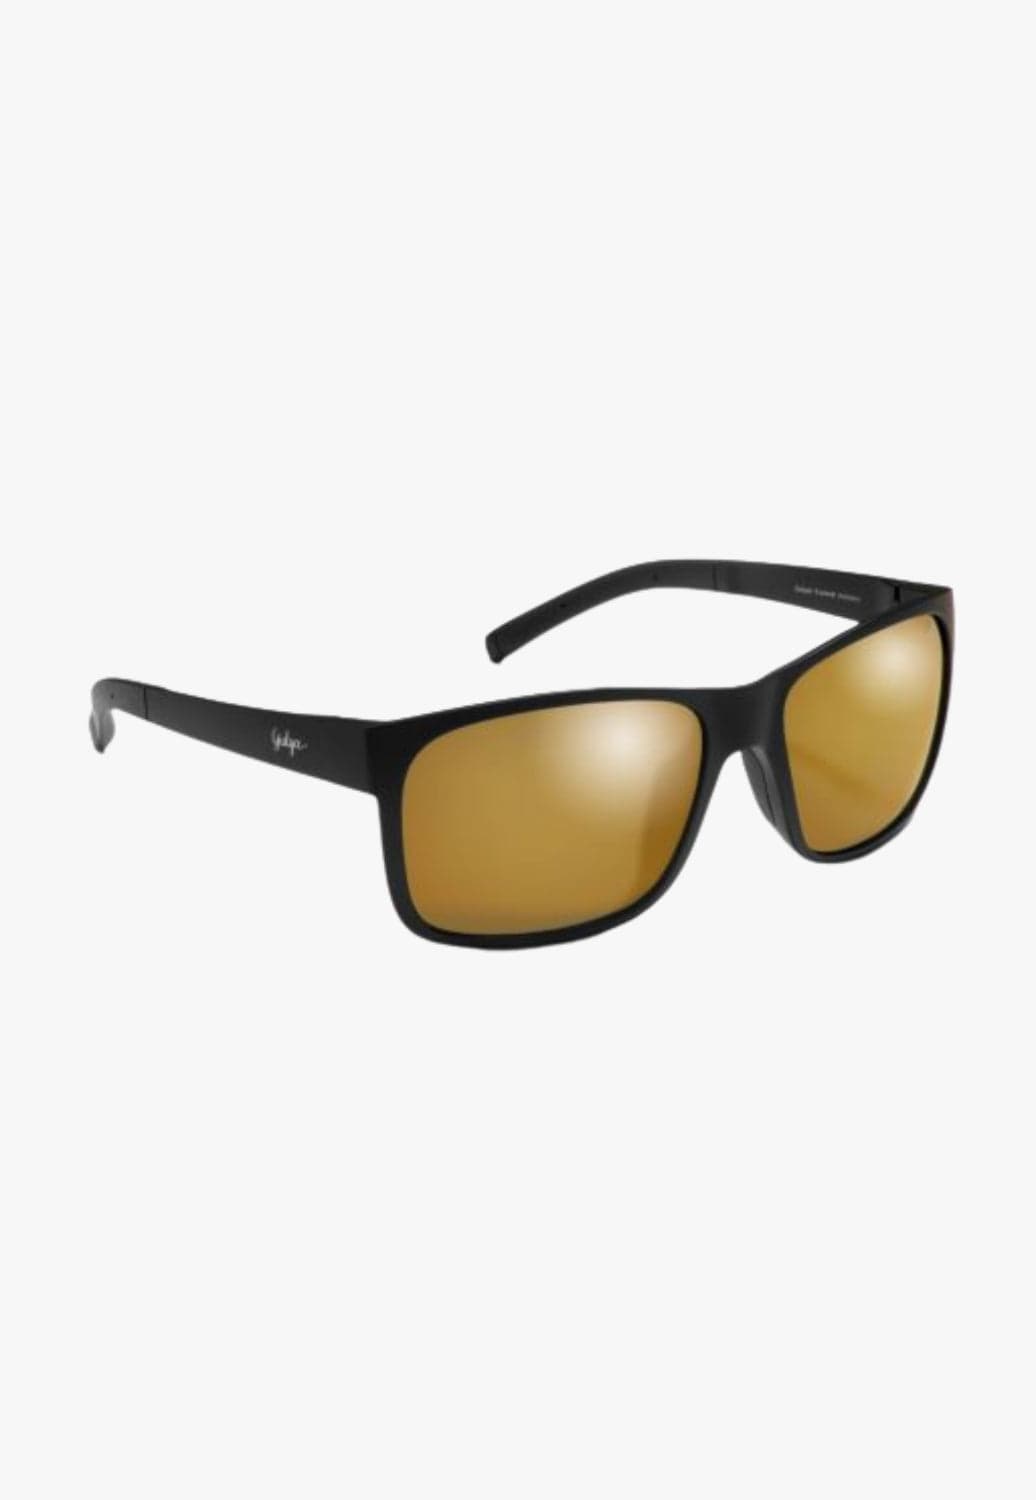 Gidgee Eyes ACCESSORIES-Sunglasses OSFA / Bronze Gidgee Eyes Mustang Sunglasses